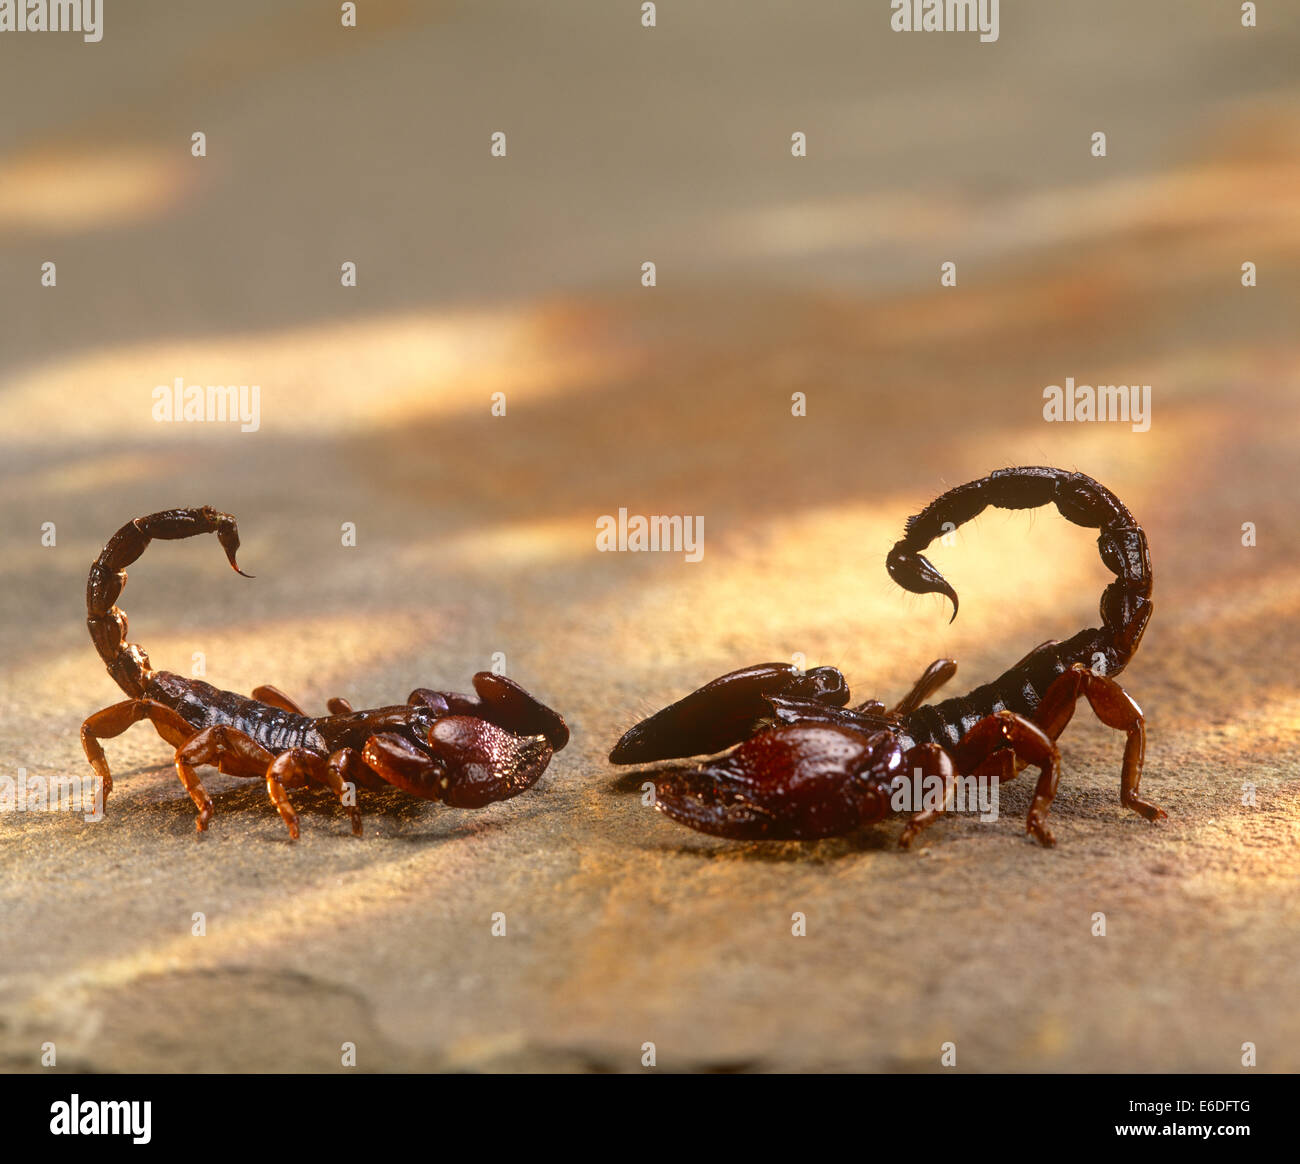 Due scorpioni tra loro affacciate Foto Stock